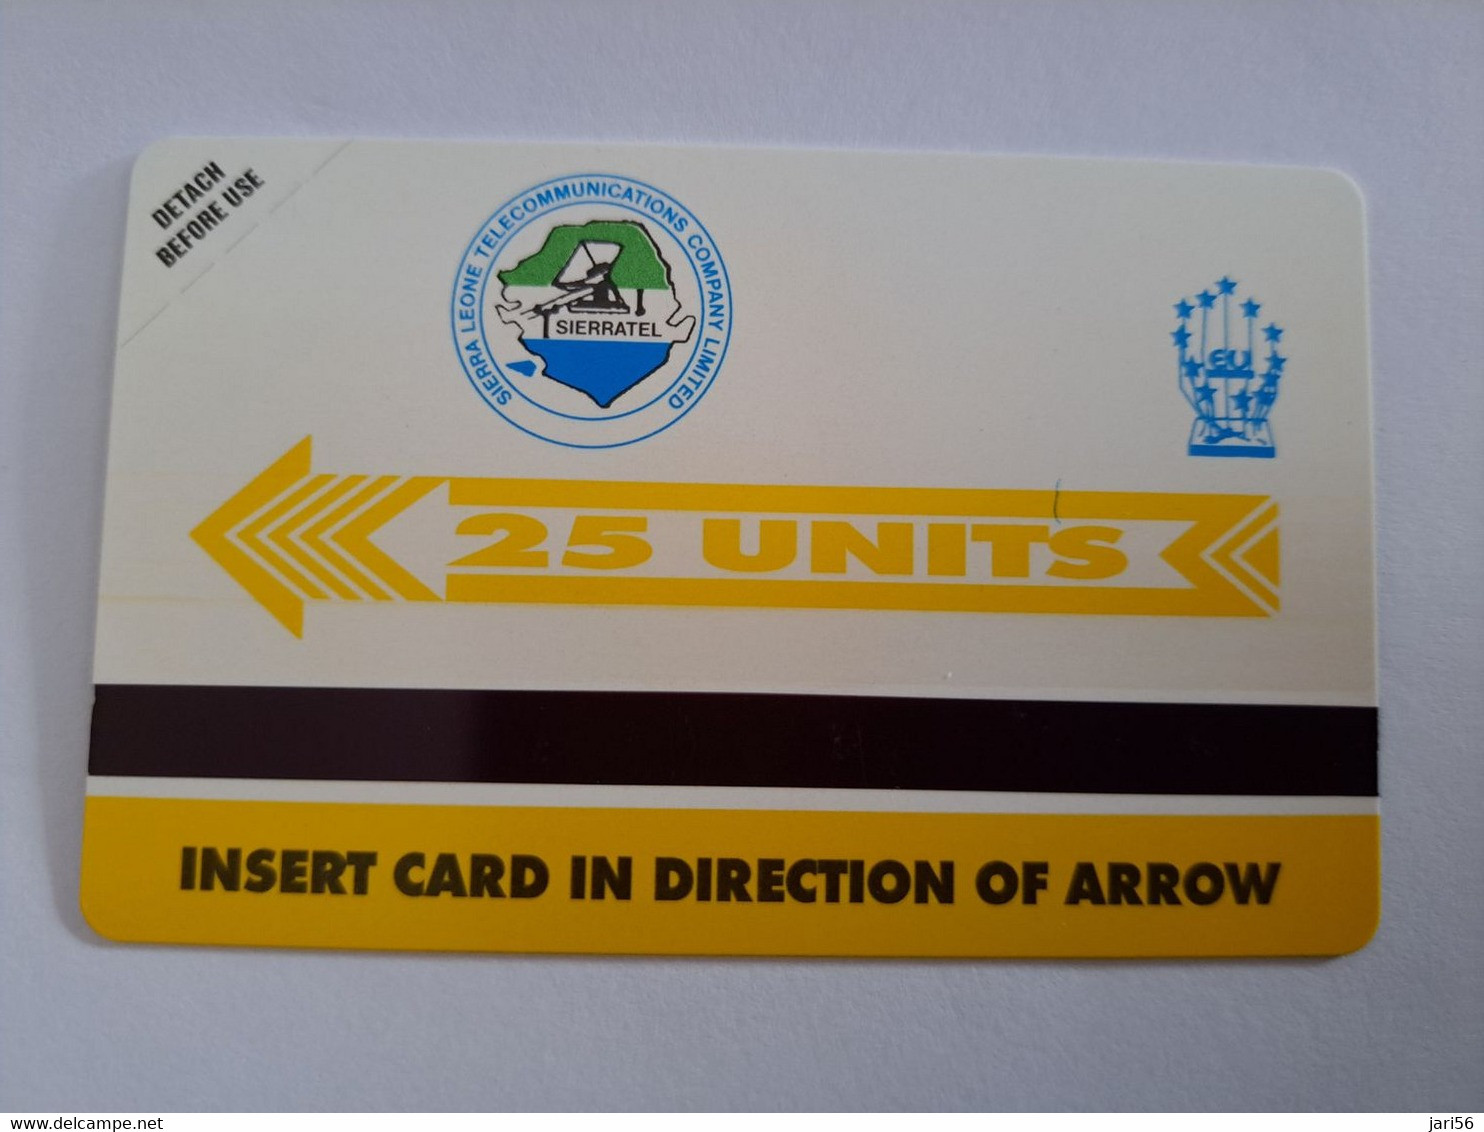 SIERRA LEONE  25 UNITS /  URMET CARD  /FLOWERS       MINT  Card     ** 10599** - Sierra Leone